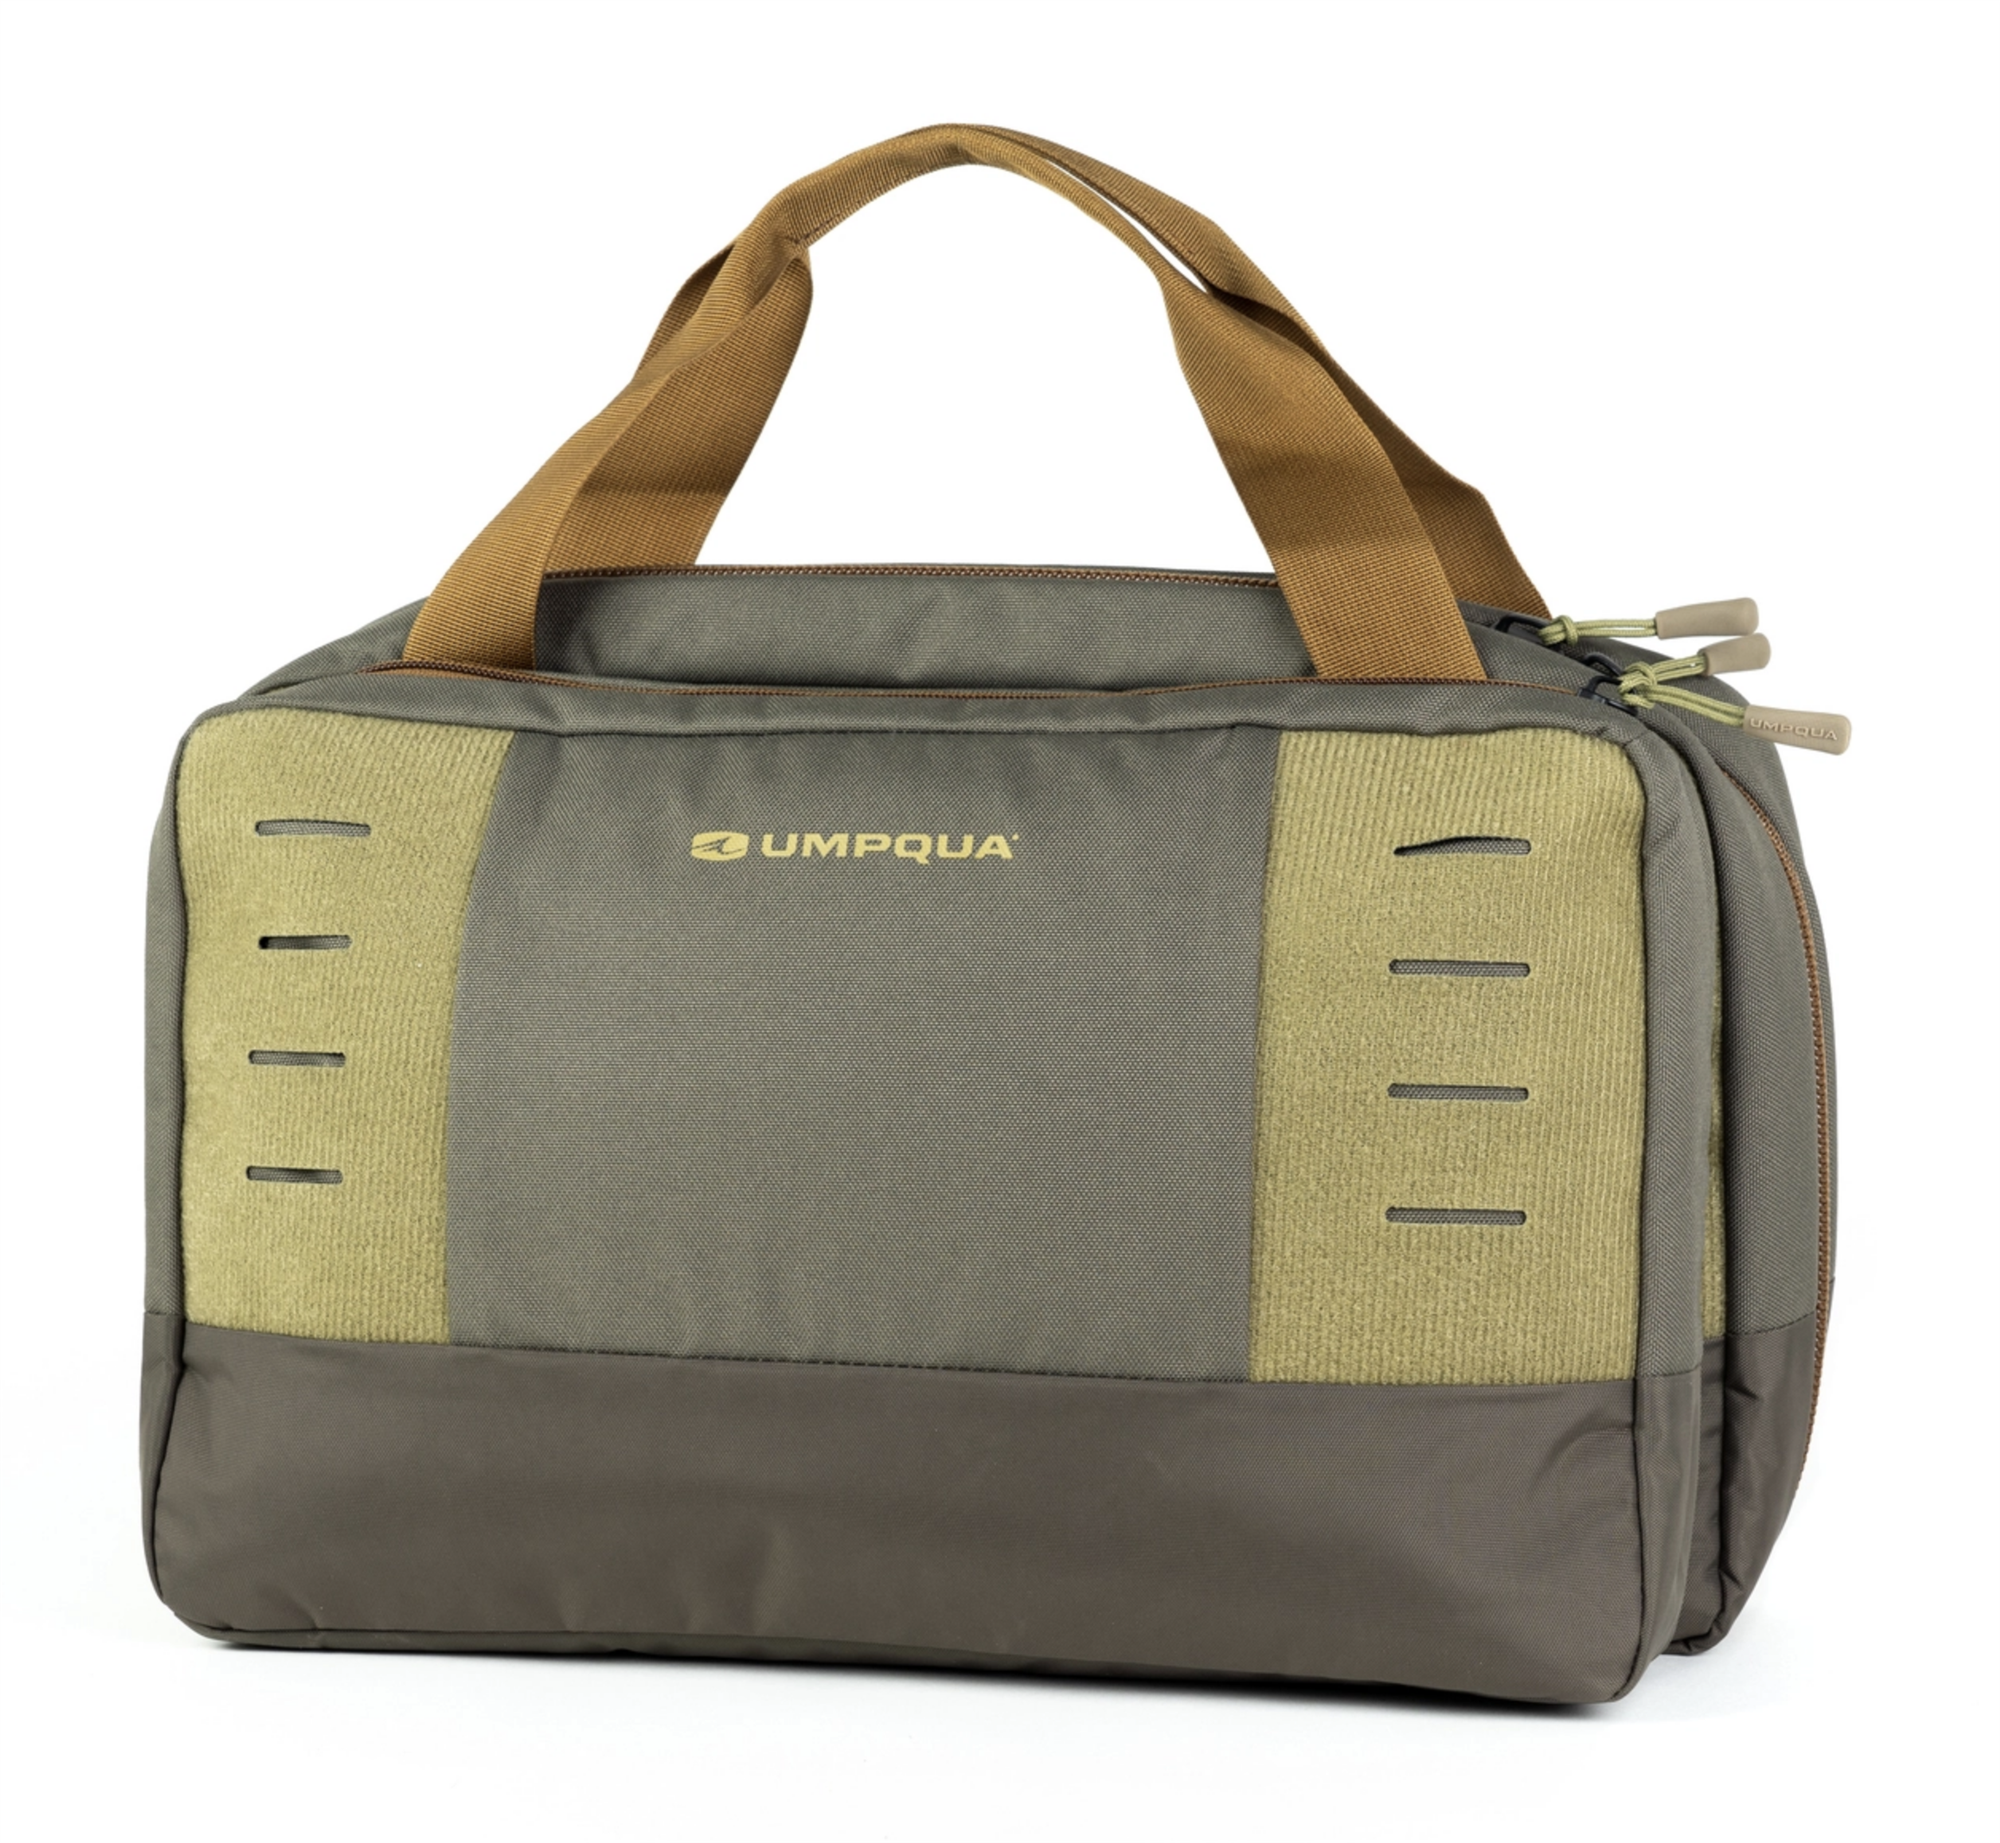 Umpqua ZS2 Traveler Tying Kit Bag